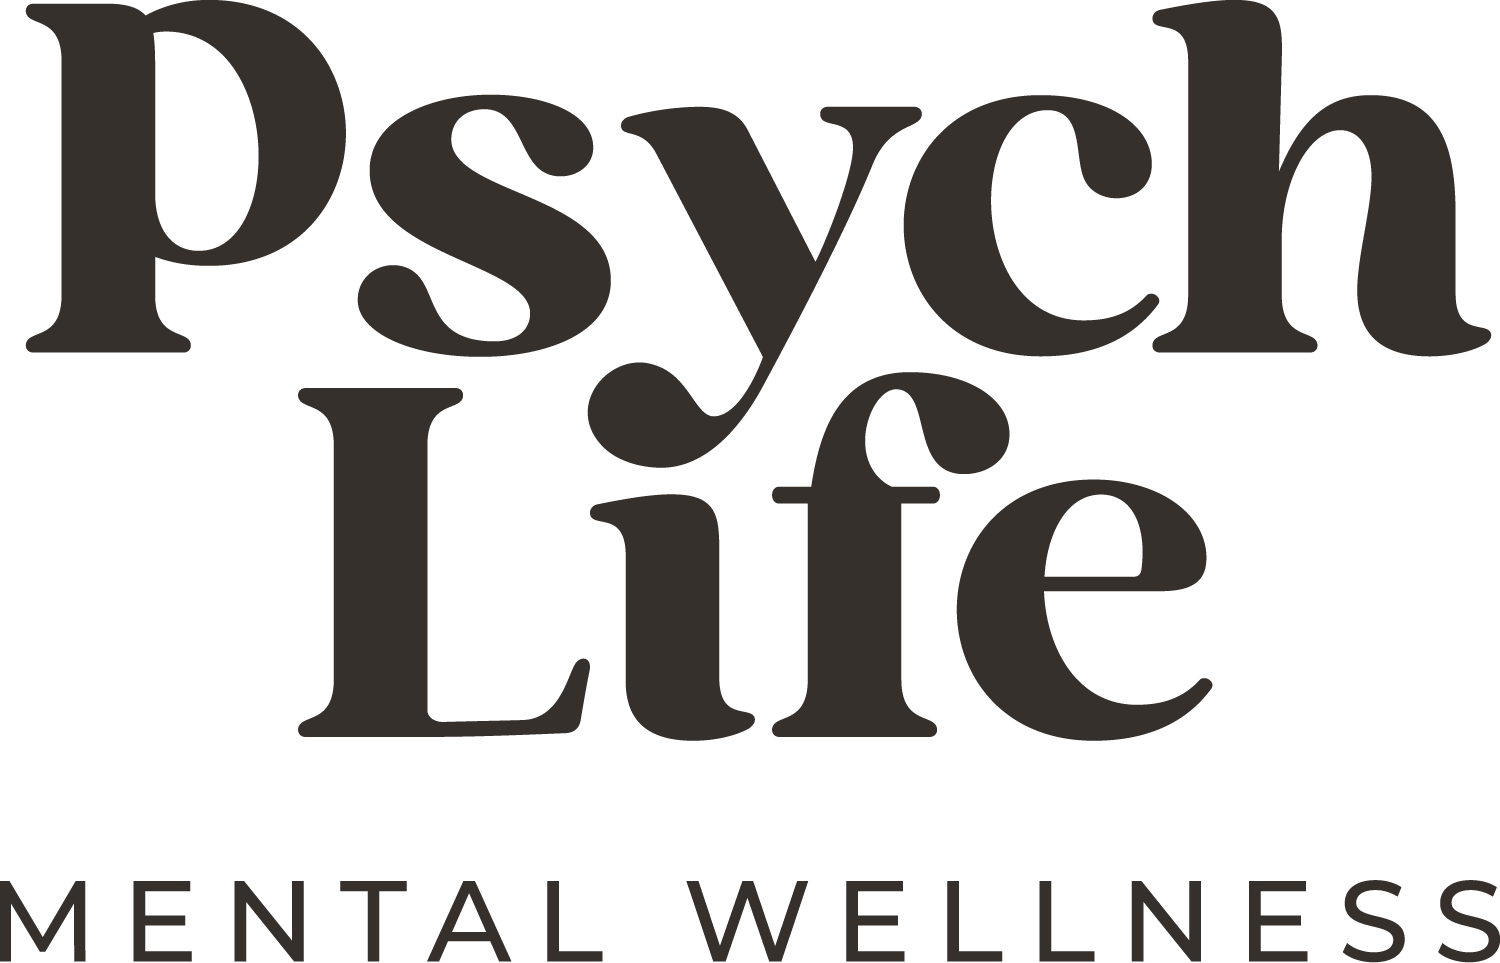 PsychLife Mental Wellness